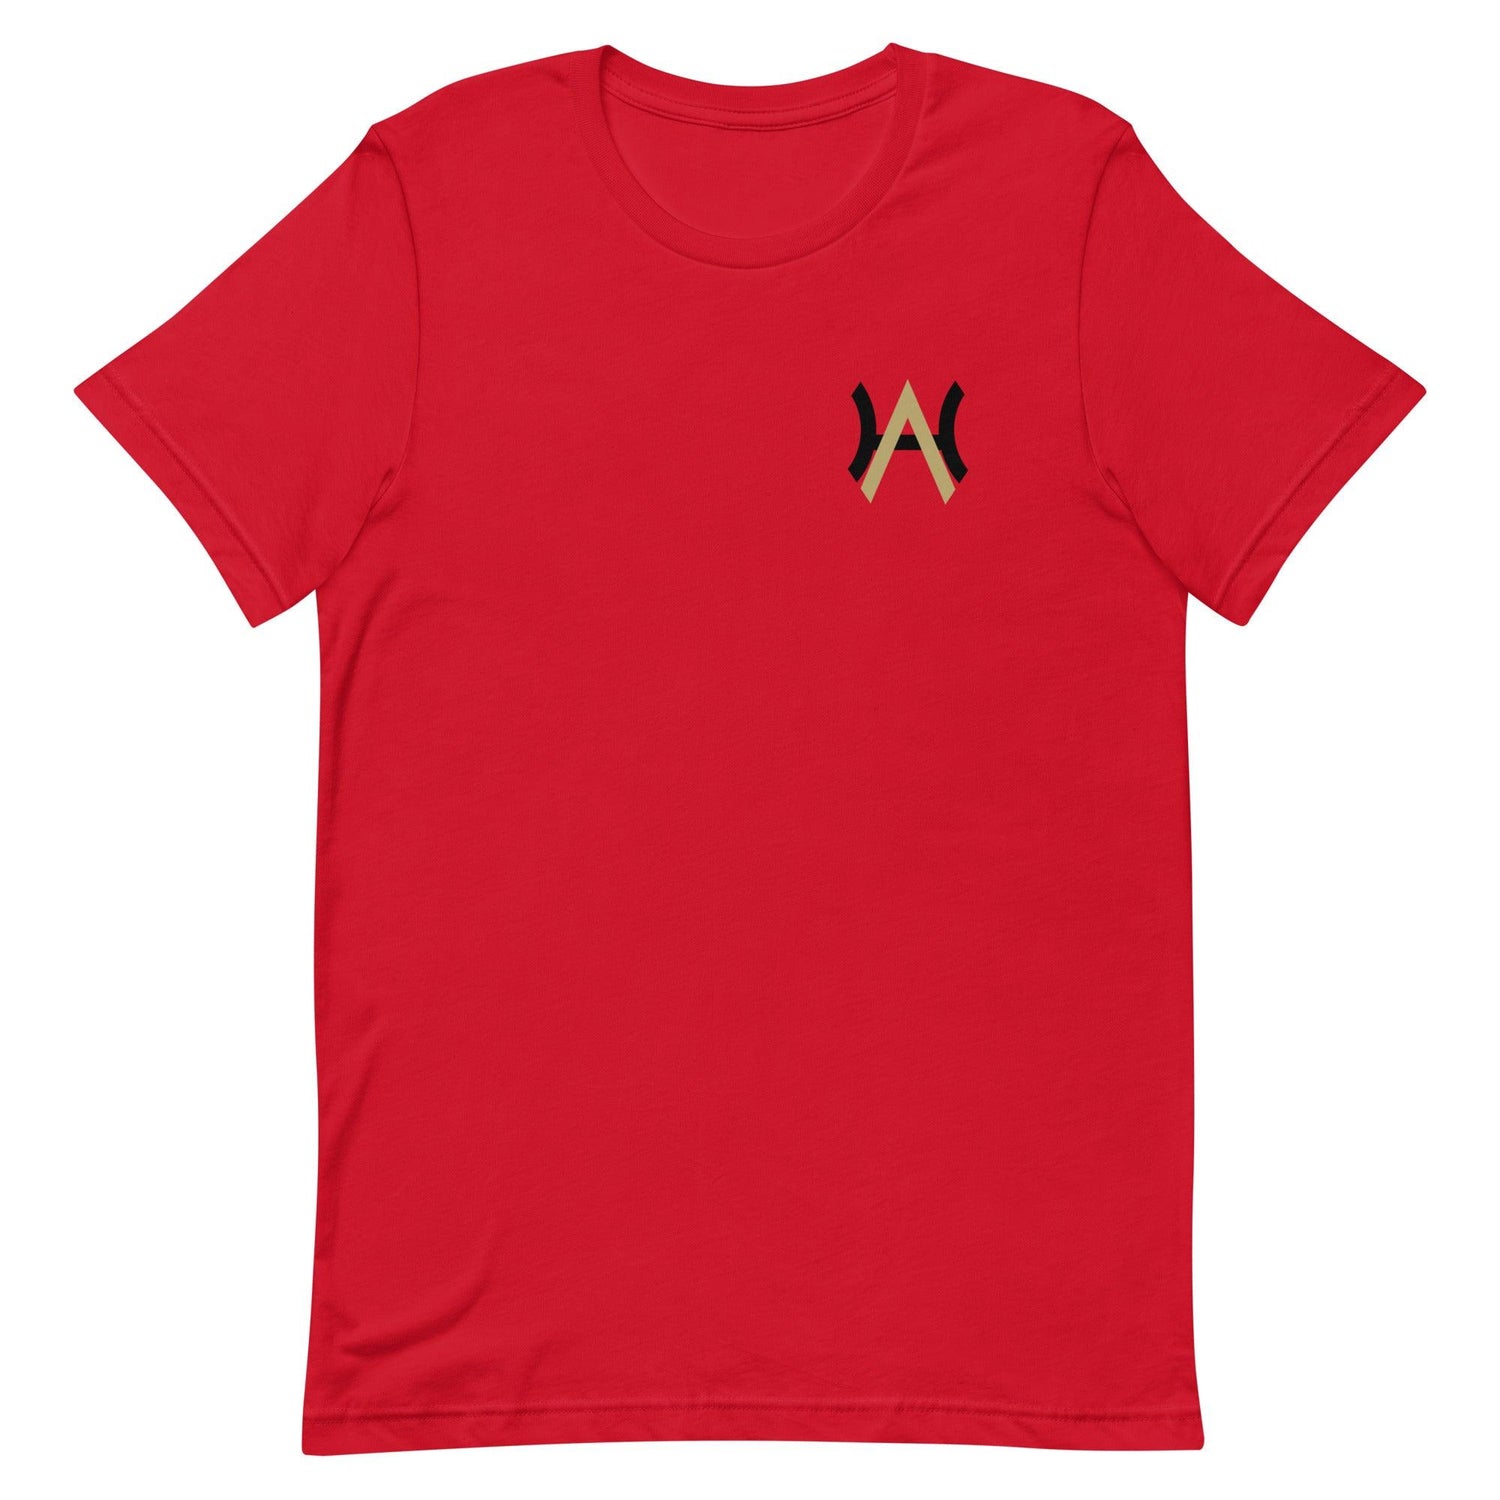 Andrew Harris "Essential" t-shirt - Fan Arch